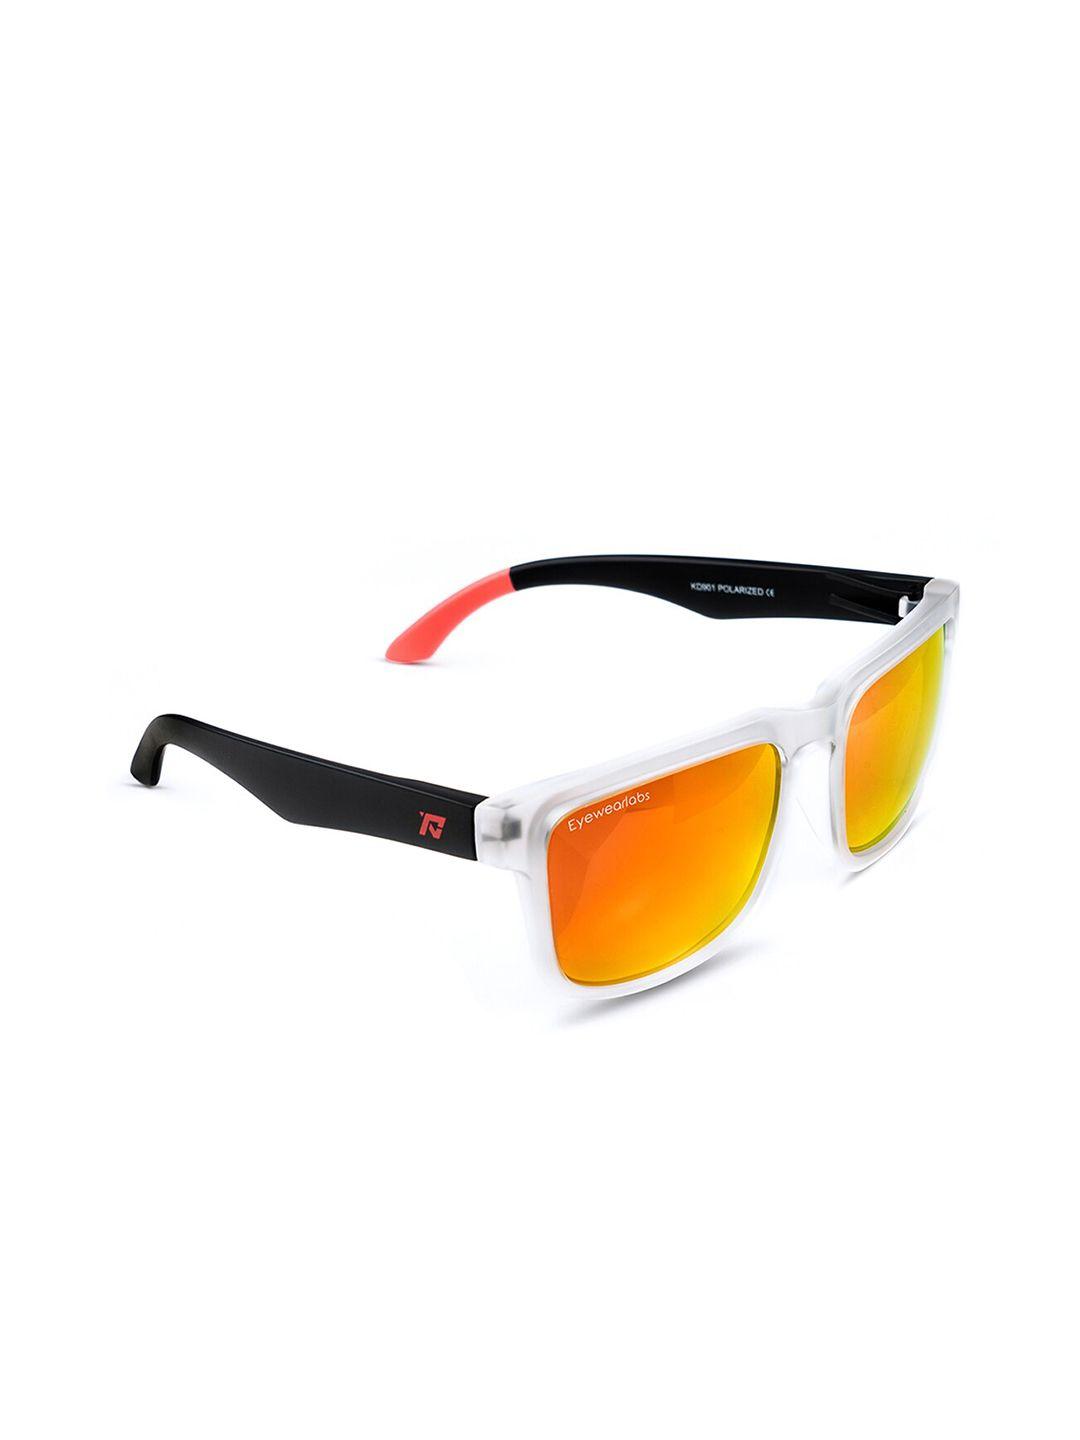 eyewearlabs-wayfarer-sunglasses-with-polarised-and-uv-protected-lens